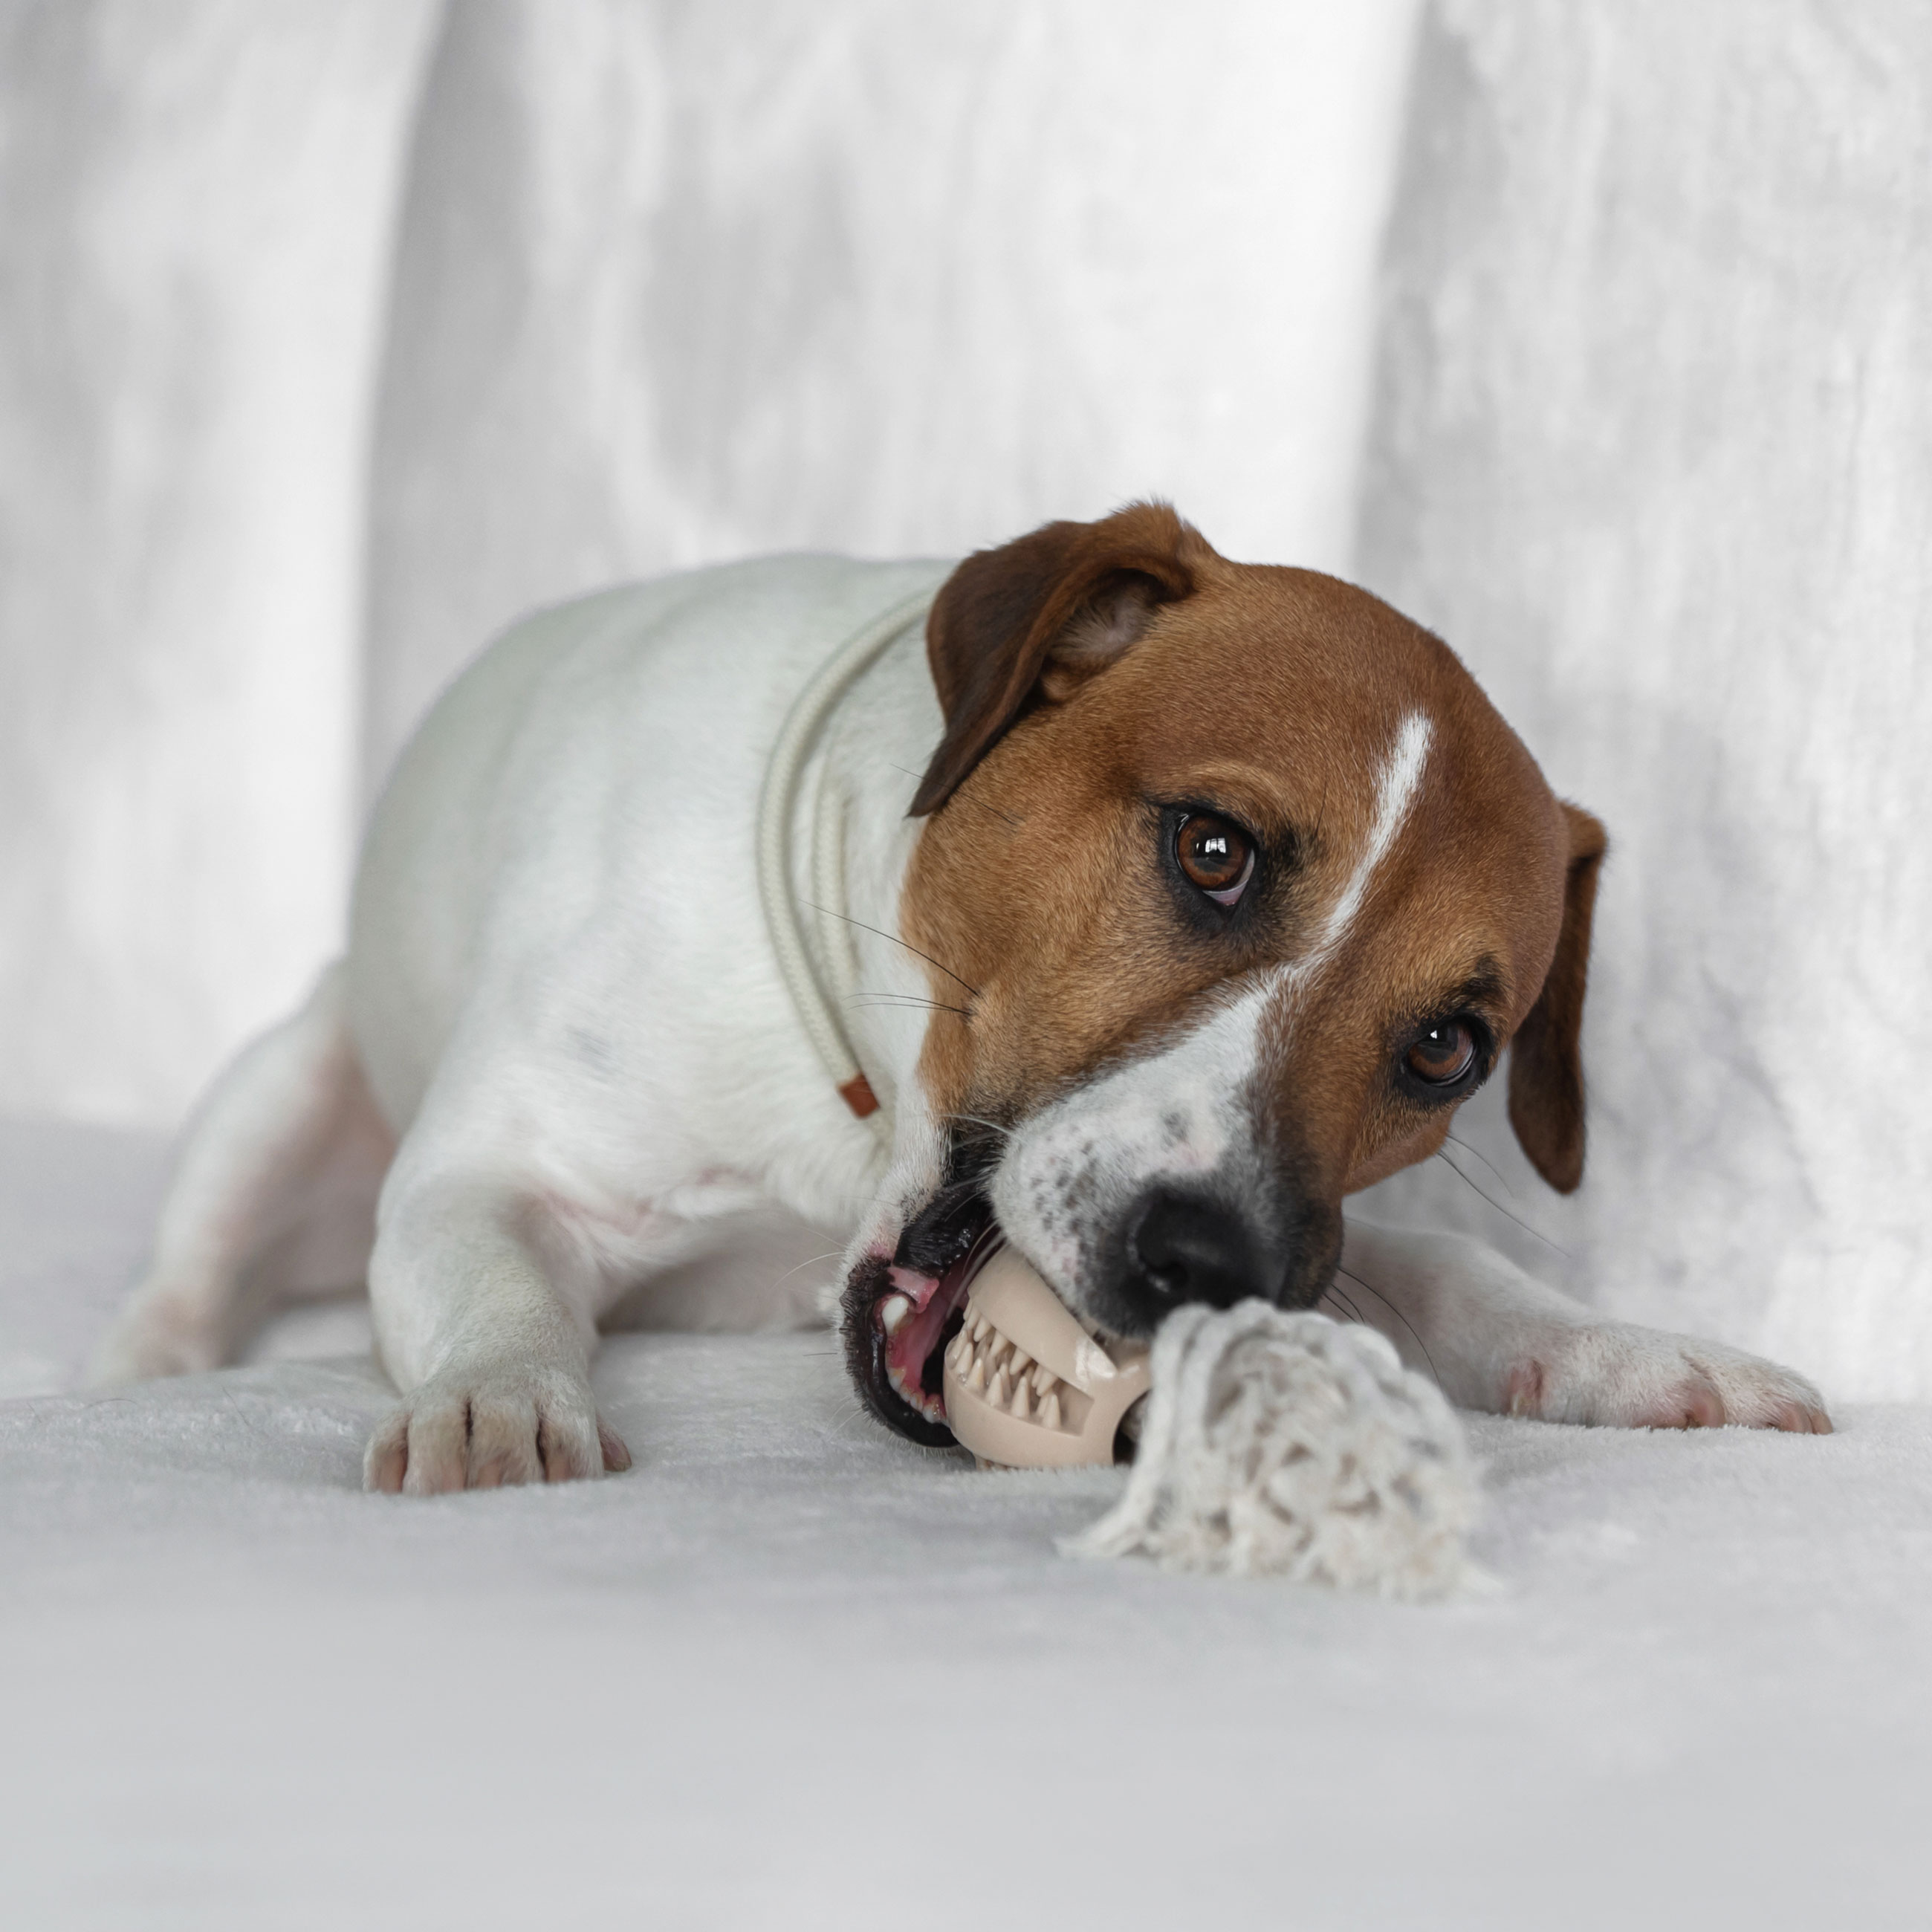 Dog toy, 28 cm, Rubber / cotton, Beige, Rope ball, Playful pet изображение № 2